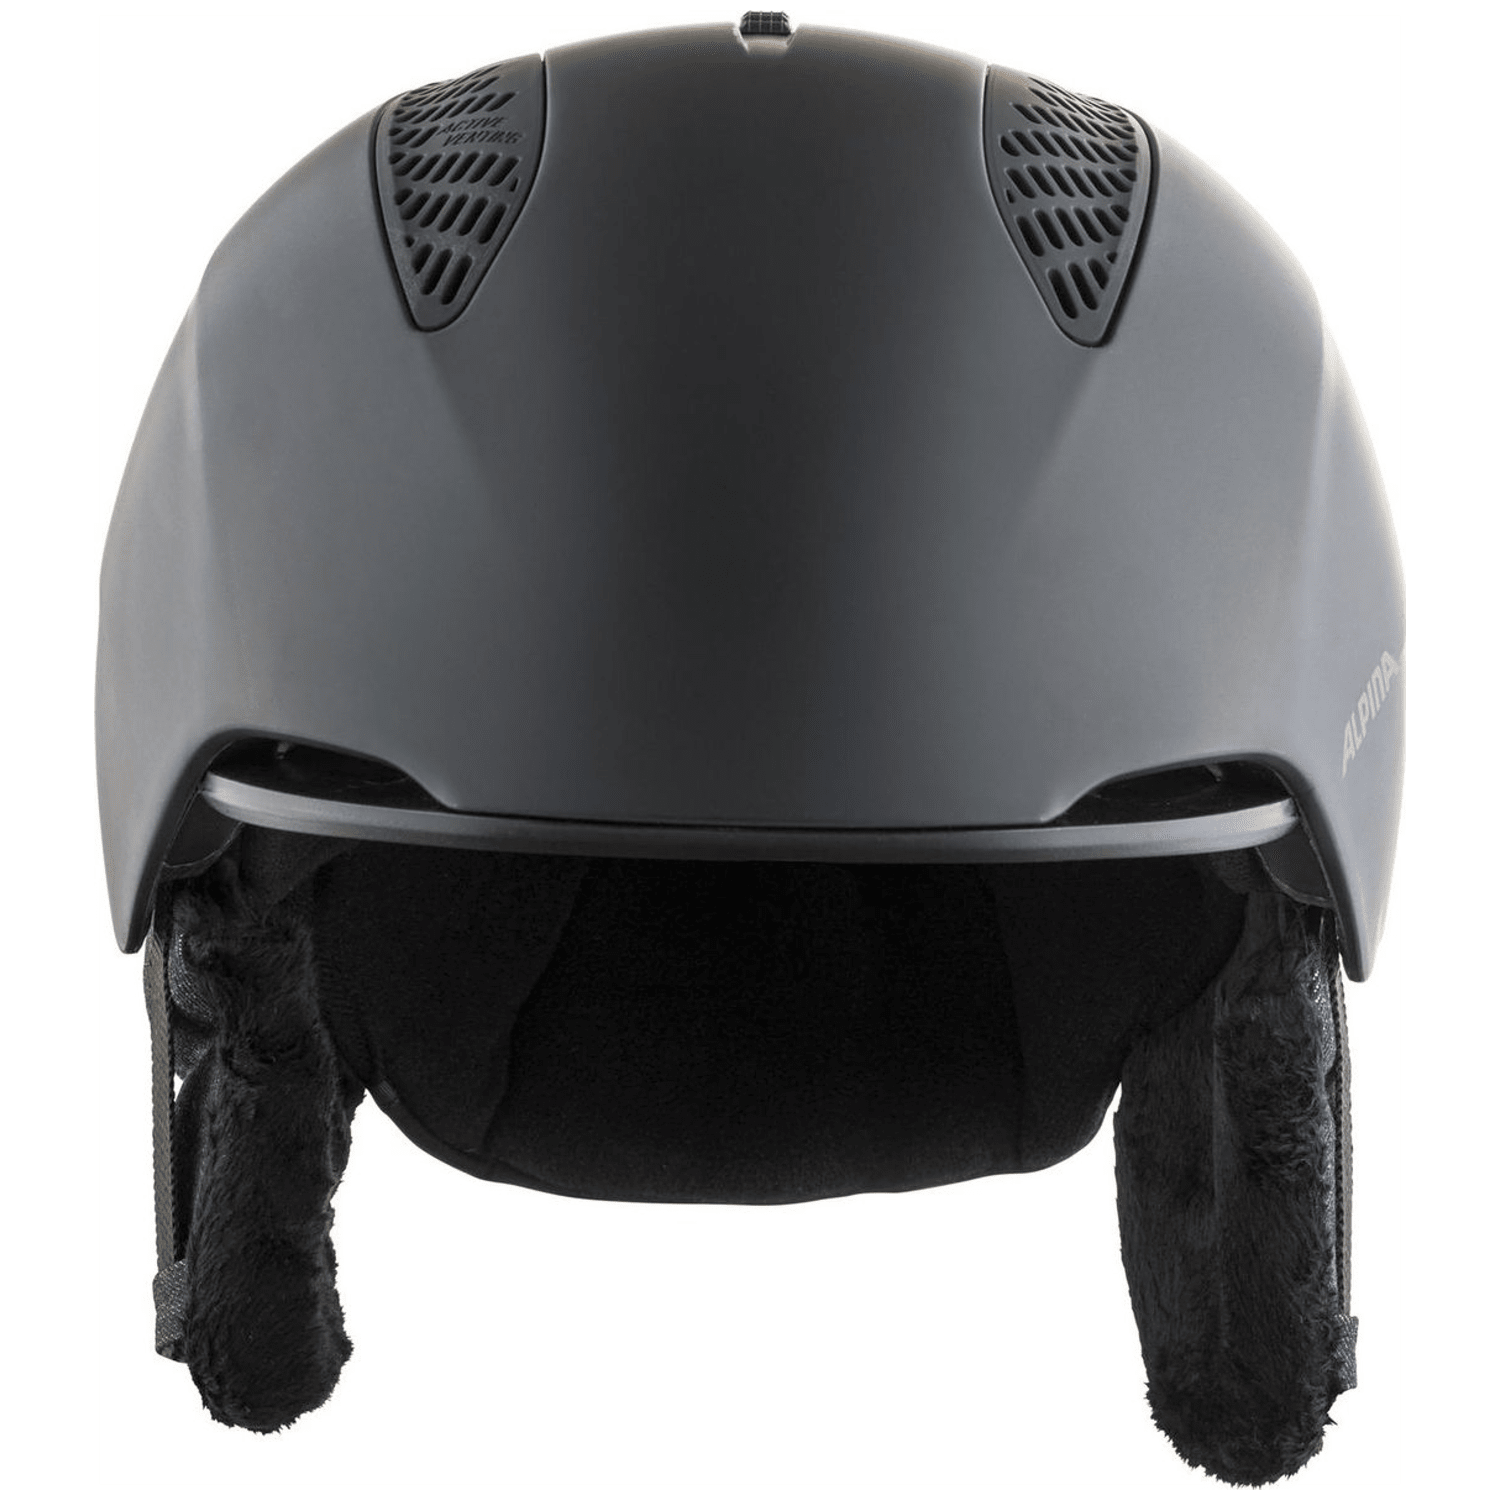 Alpina Grand Helm Unisex